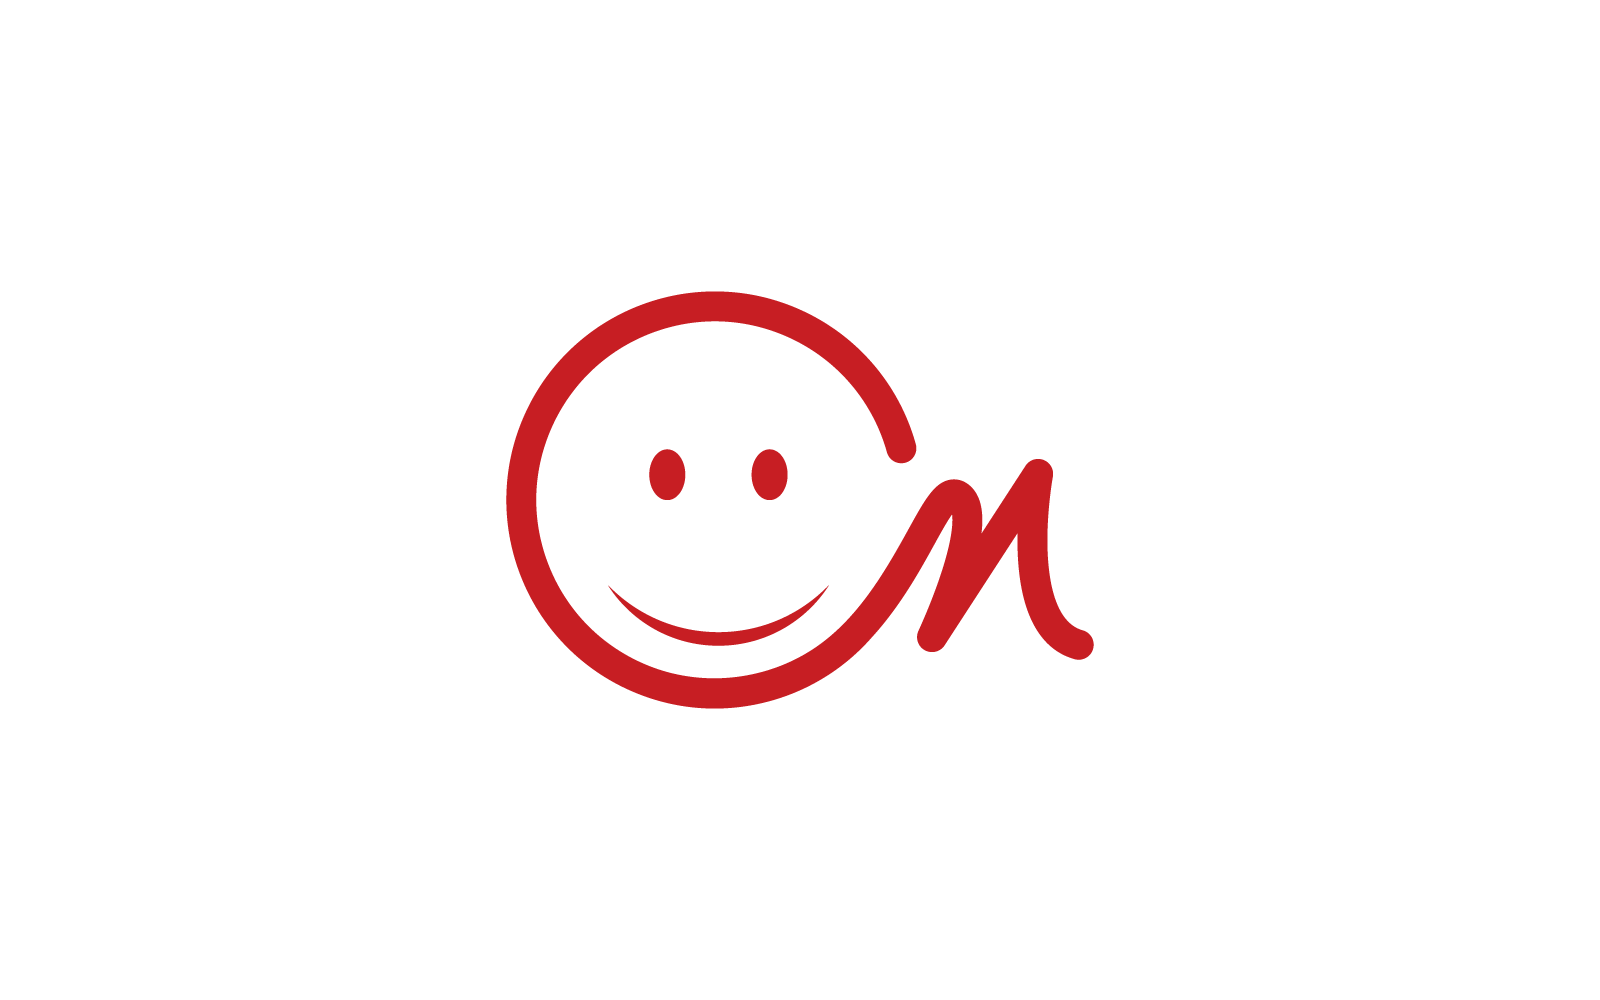 M or N Letter logo business template flat design